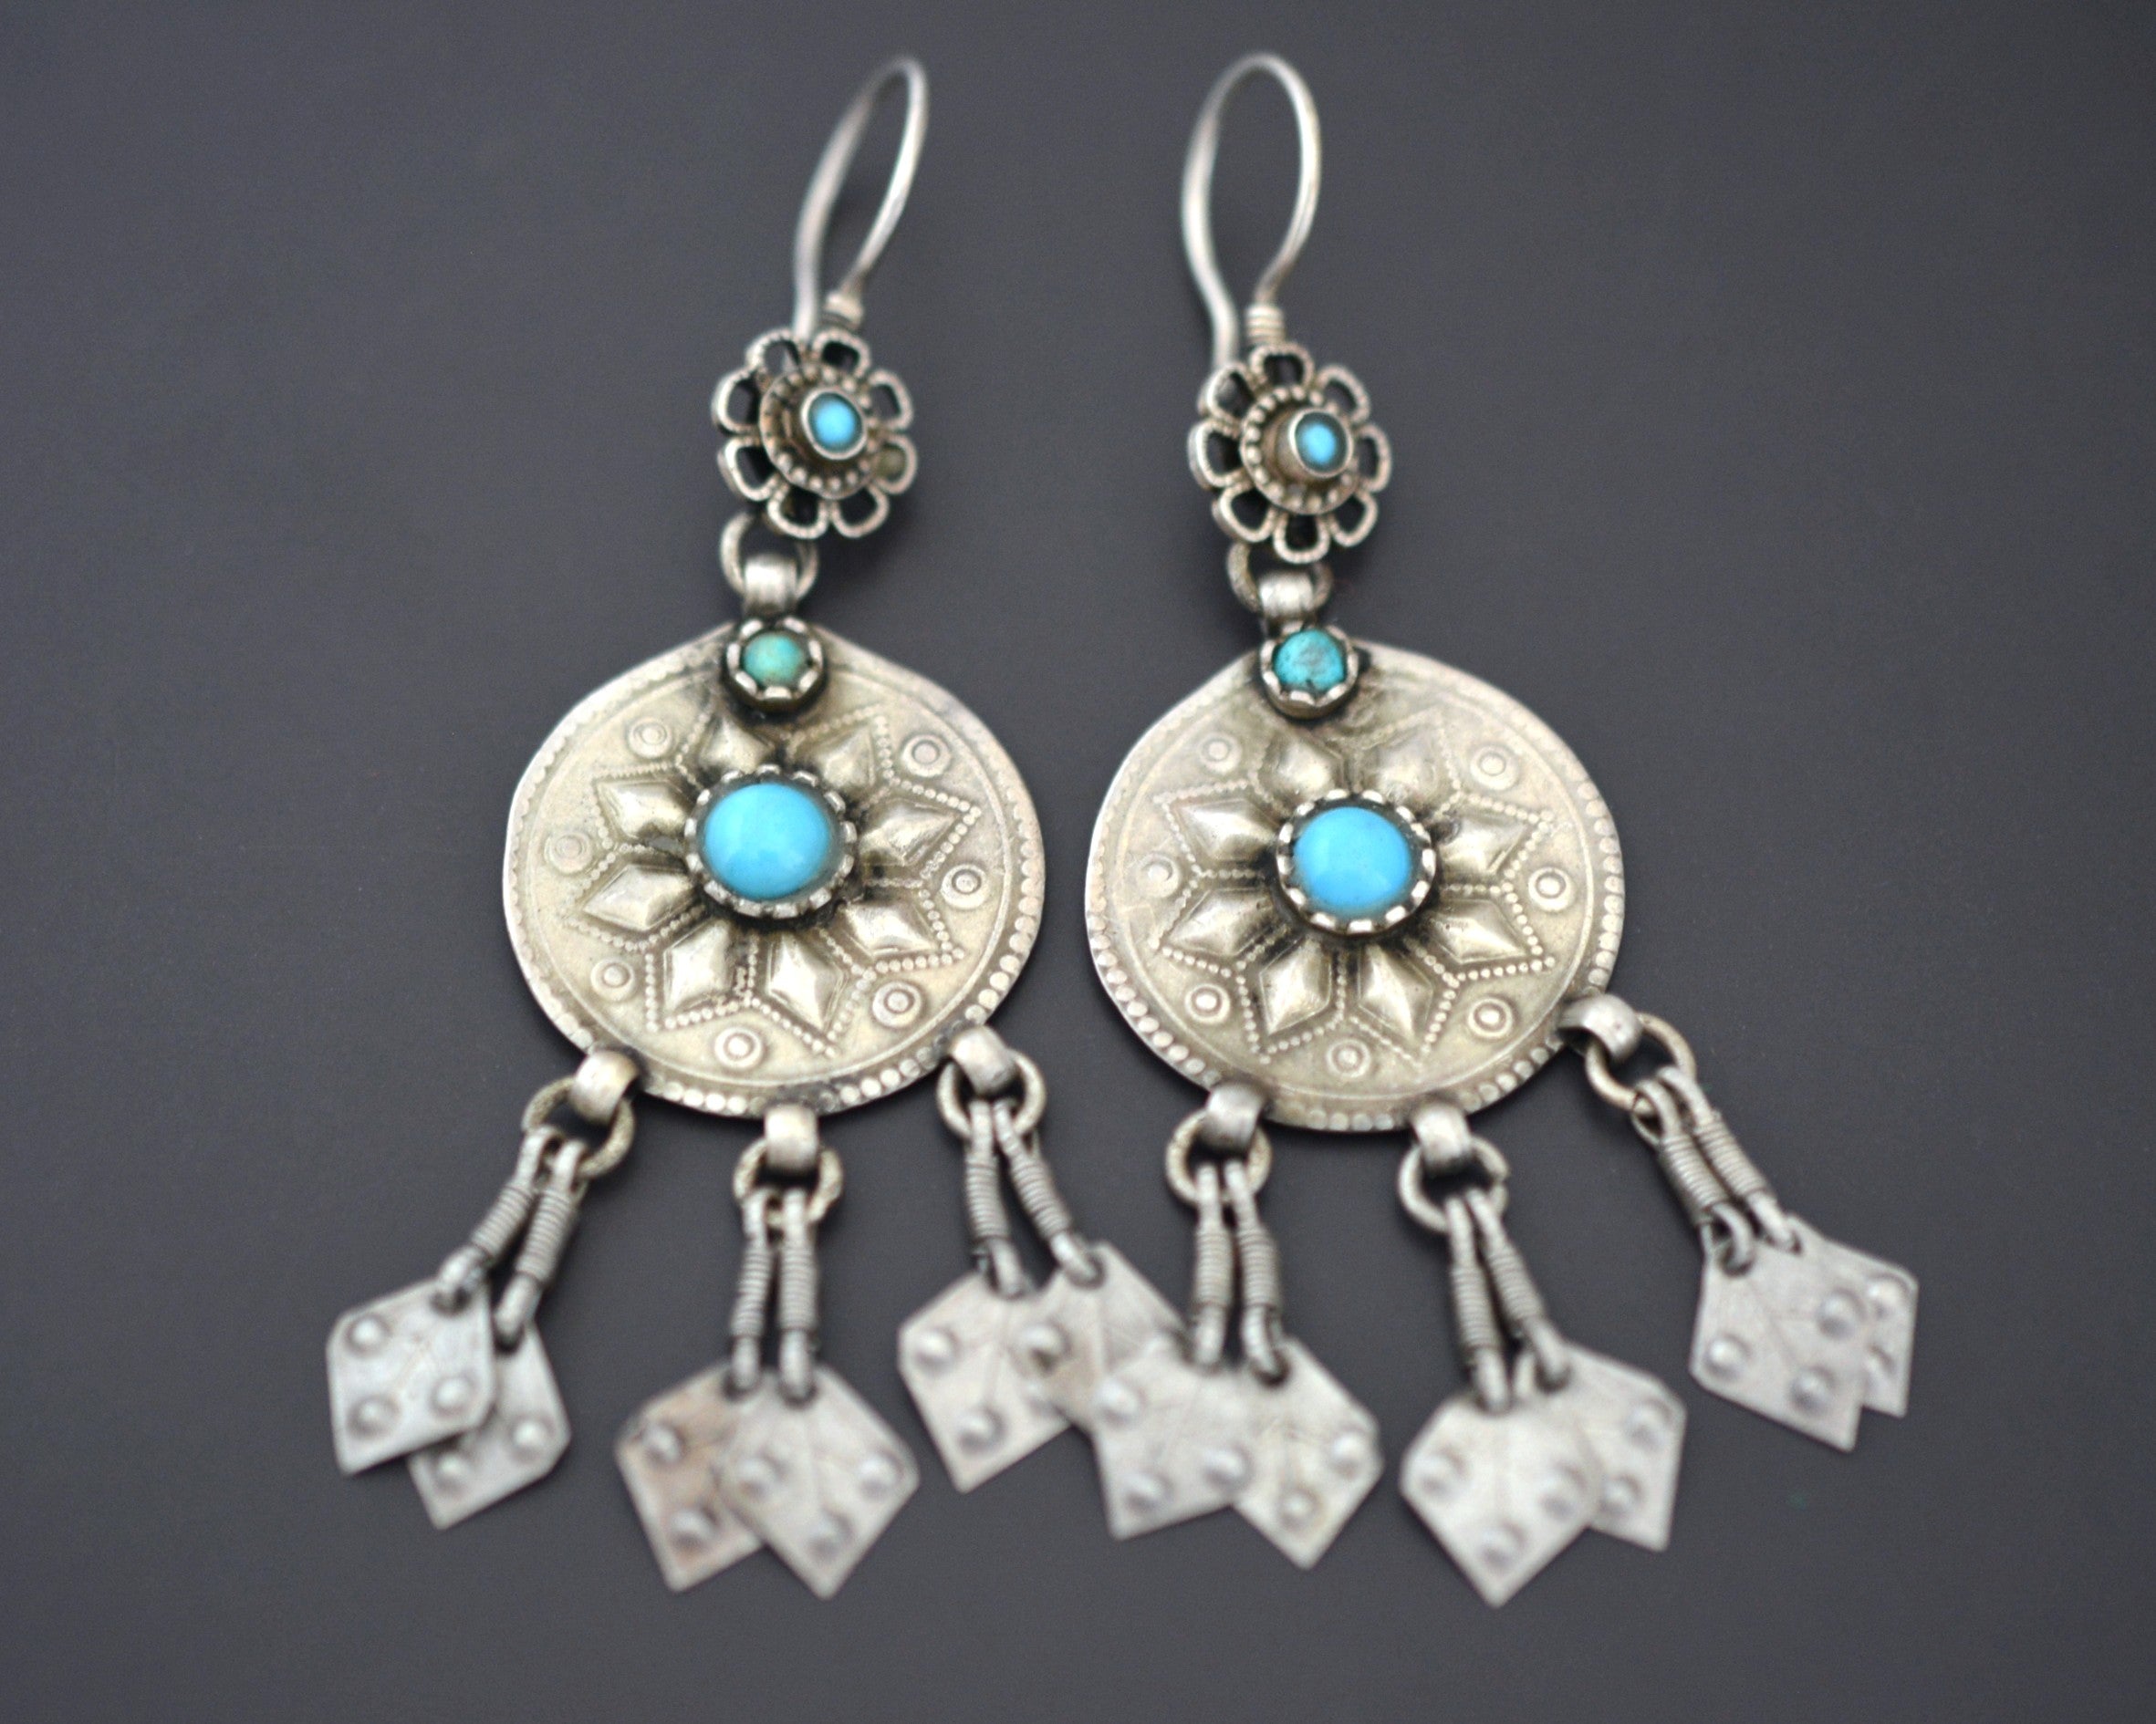 Afghani Dangle Earrings with Turquoise